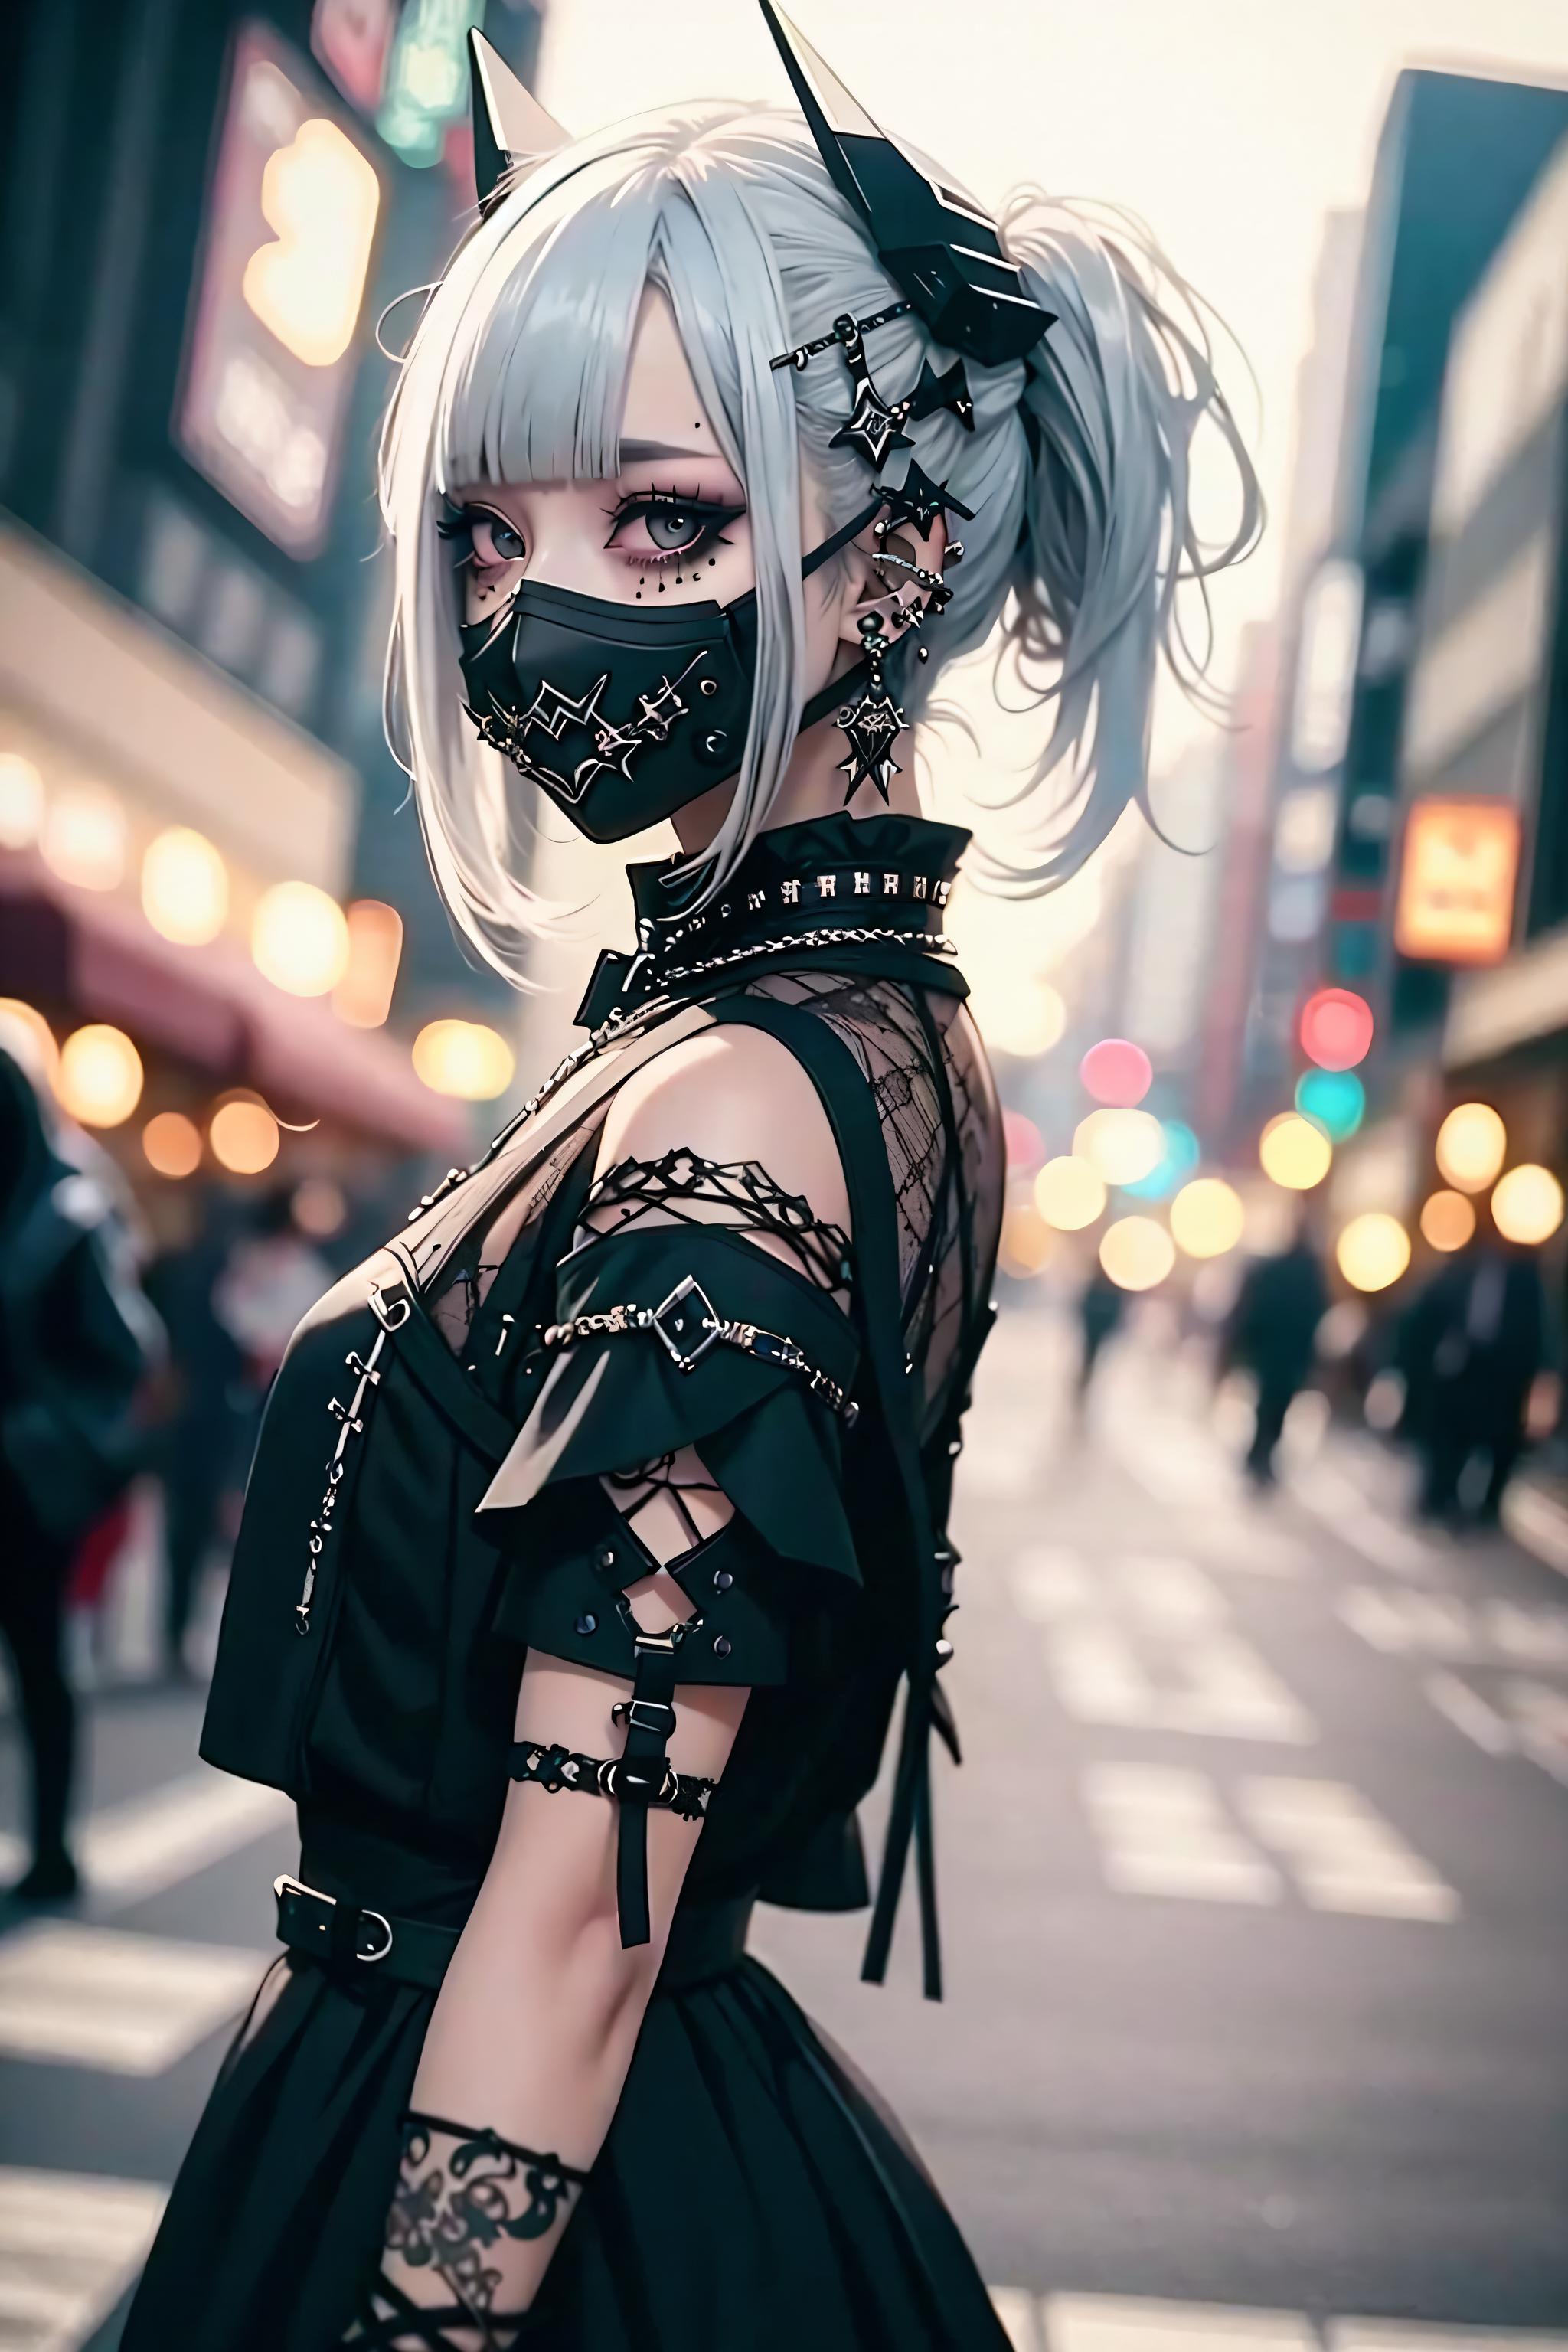 Gothic Punk Girl image by xiaozhijason